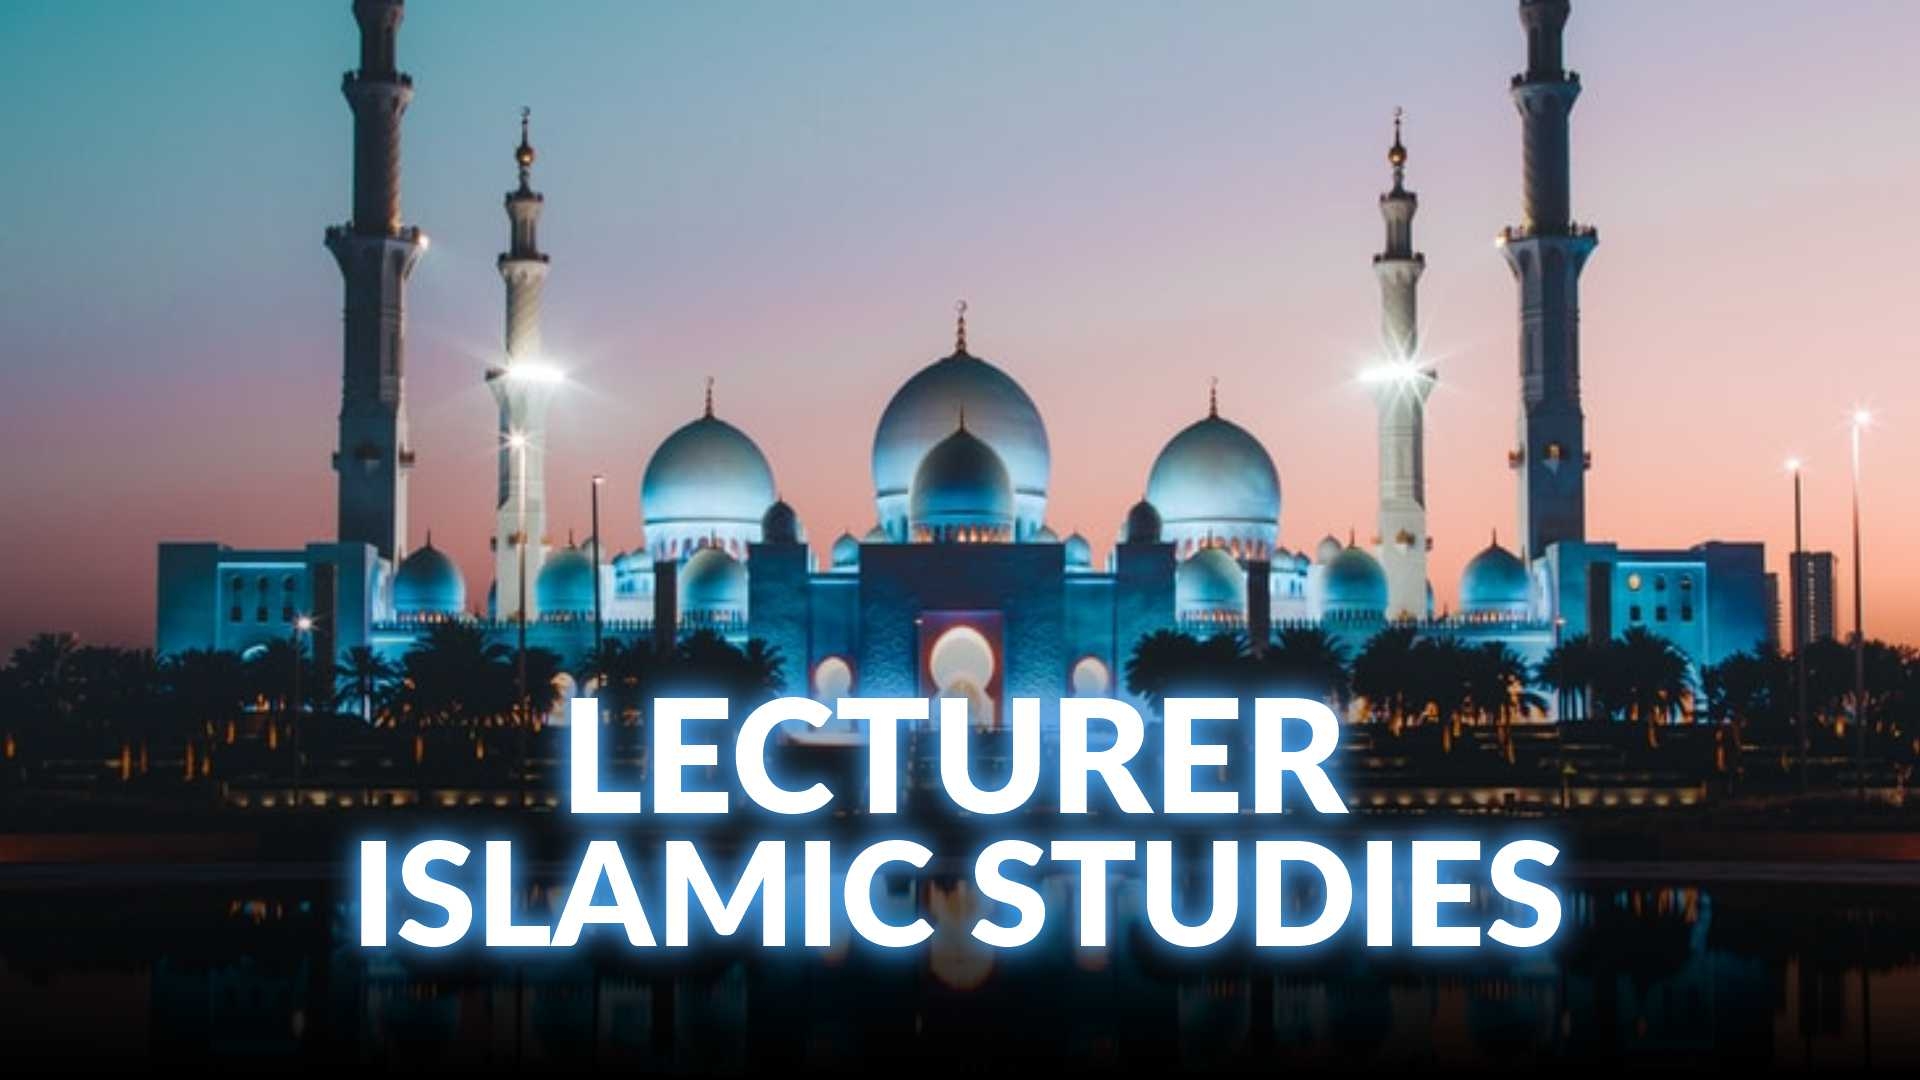 KPPSC Lecturers Islamic Studies Preparation Course